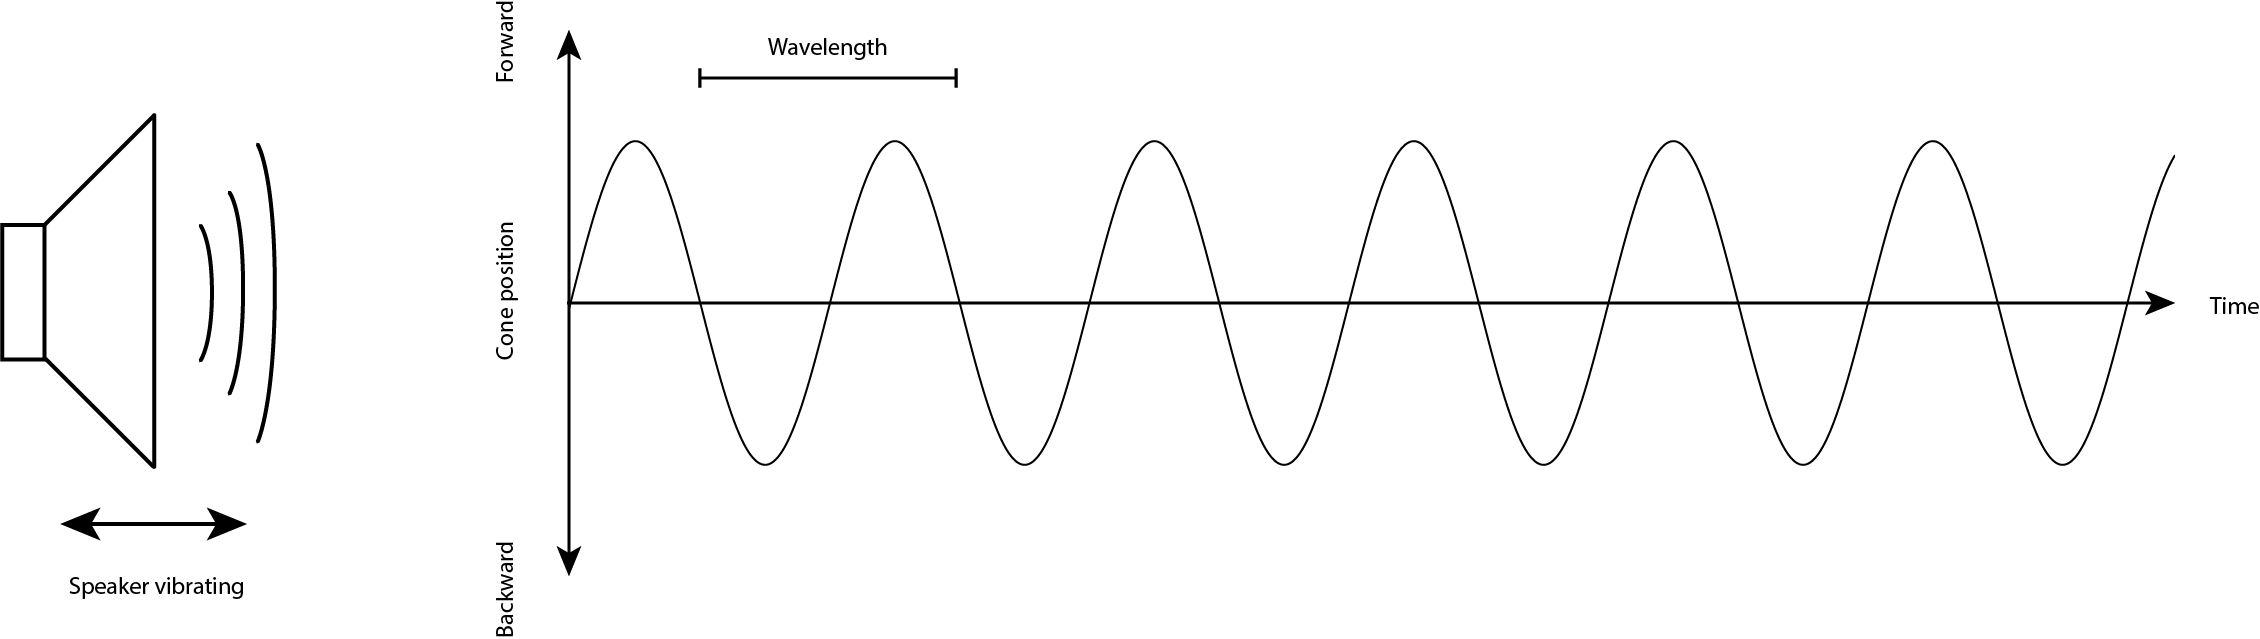 Figure 1. A speaker vibrating in air creates a sine wave movement